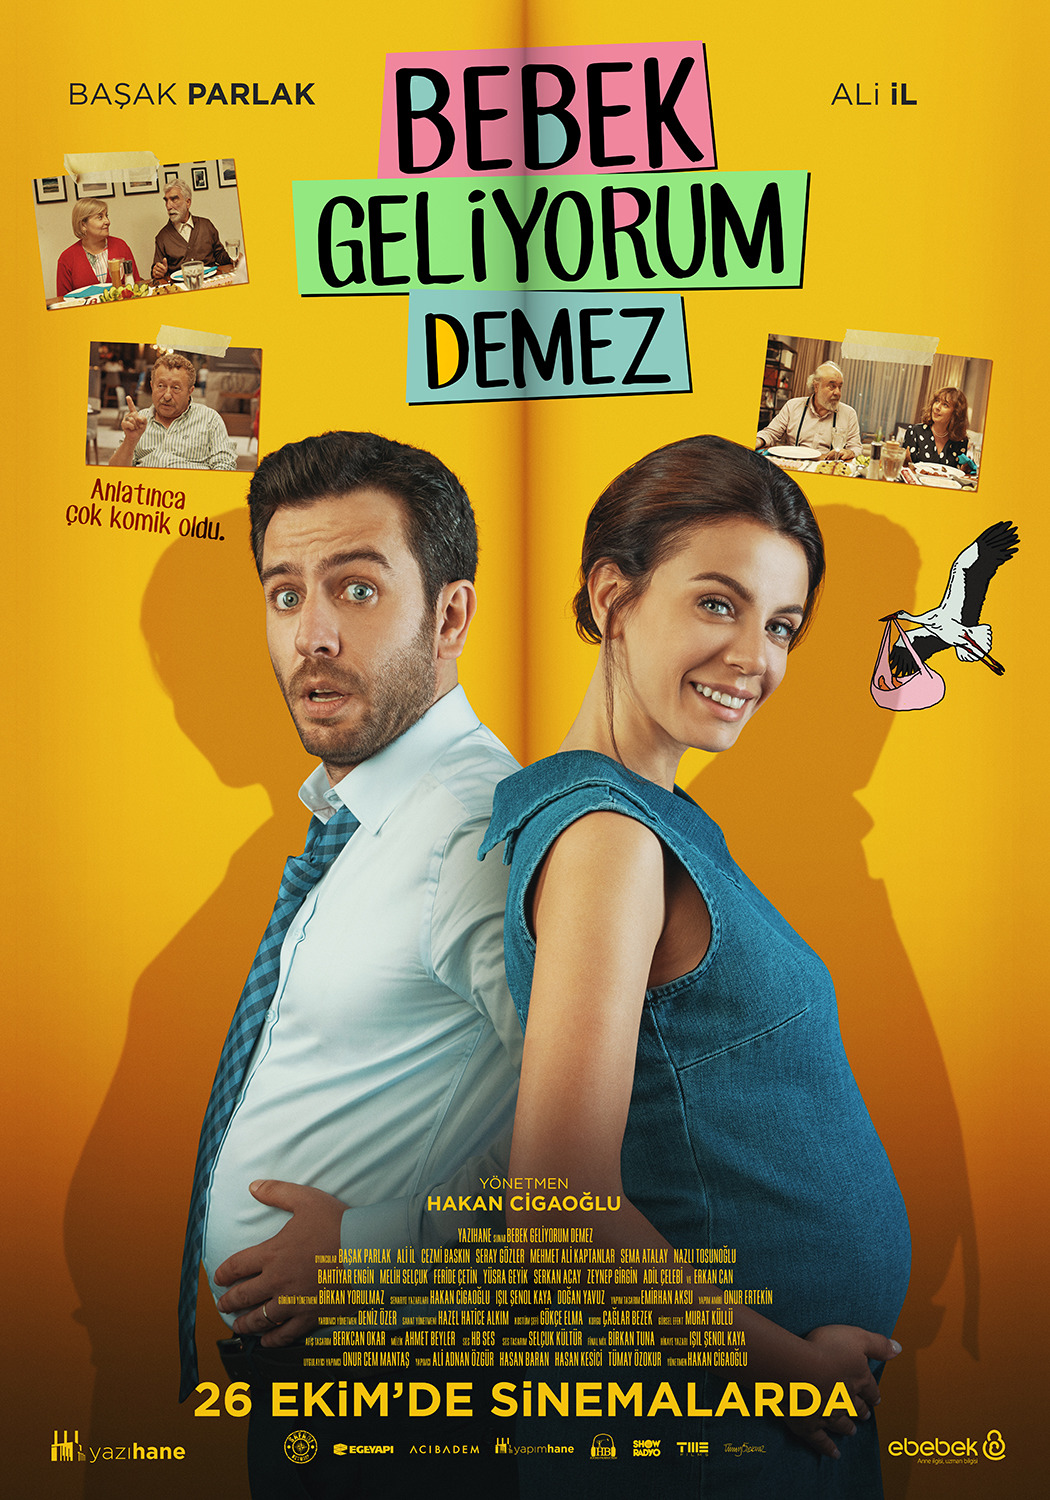 Extra Large Movie Poster Image for Bebek Geliyorum Demez (#4 of 4)